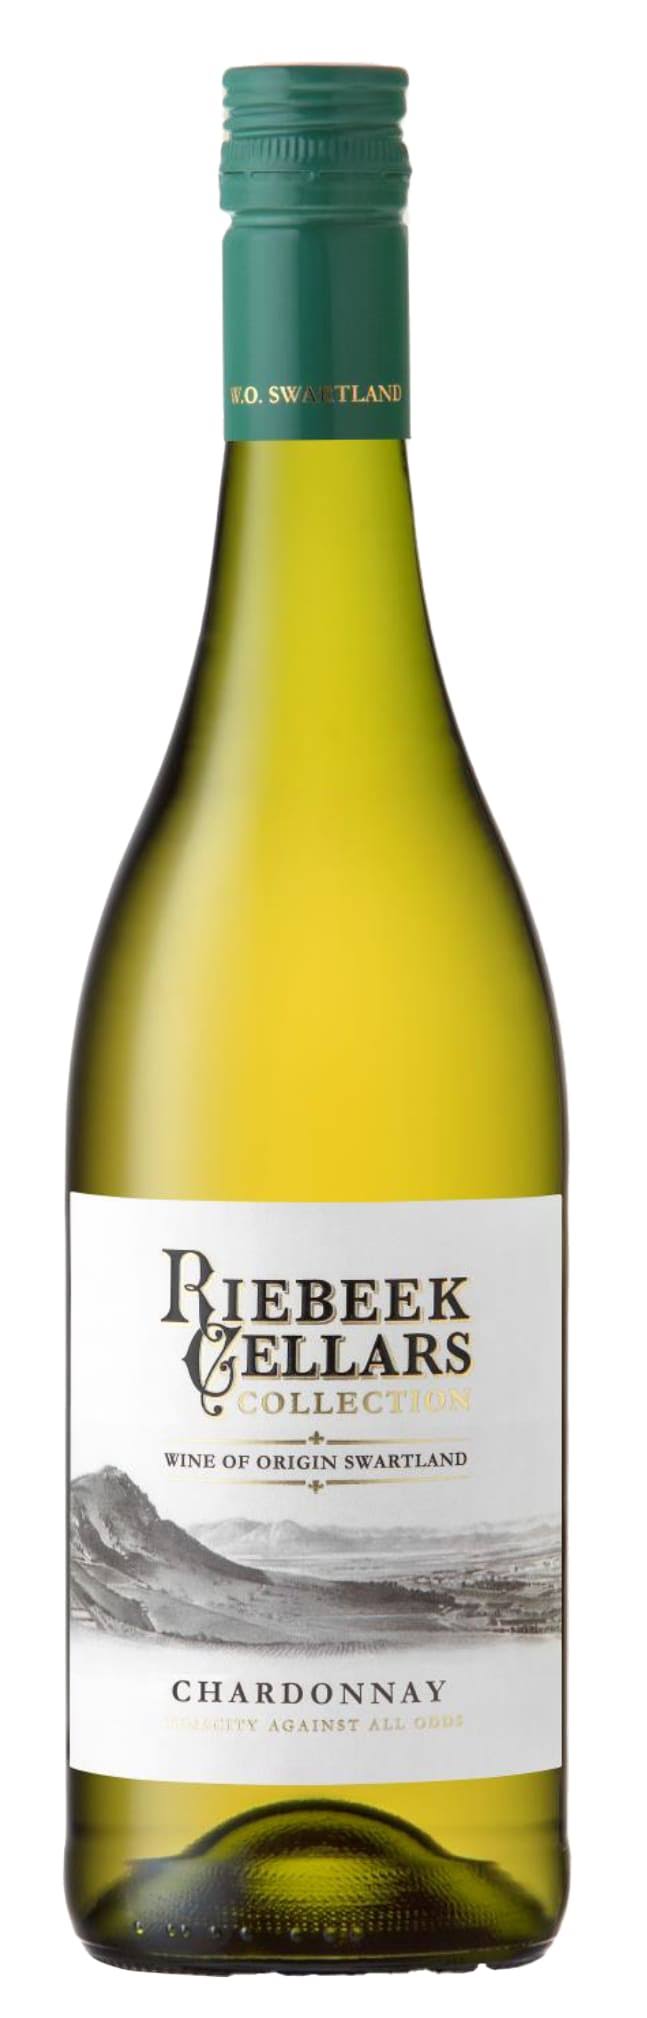 Riebeek Cellars Chardonnay 2014 White Wine from South Africa - 750ml